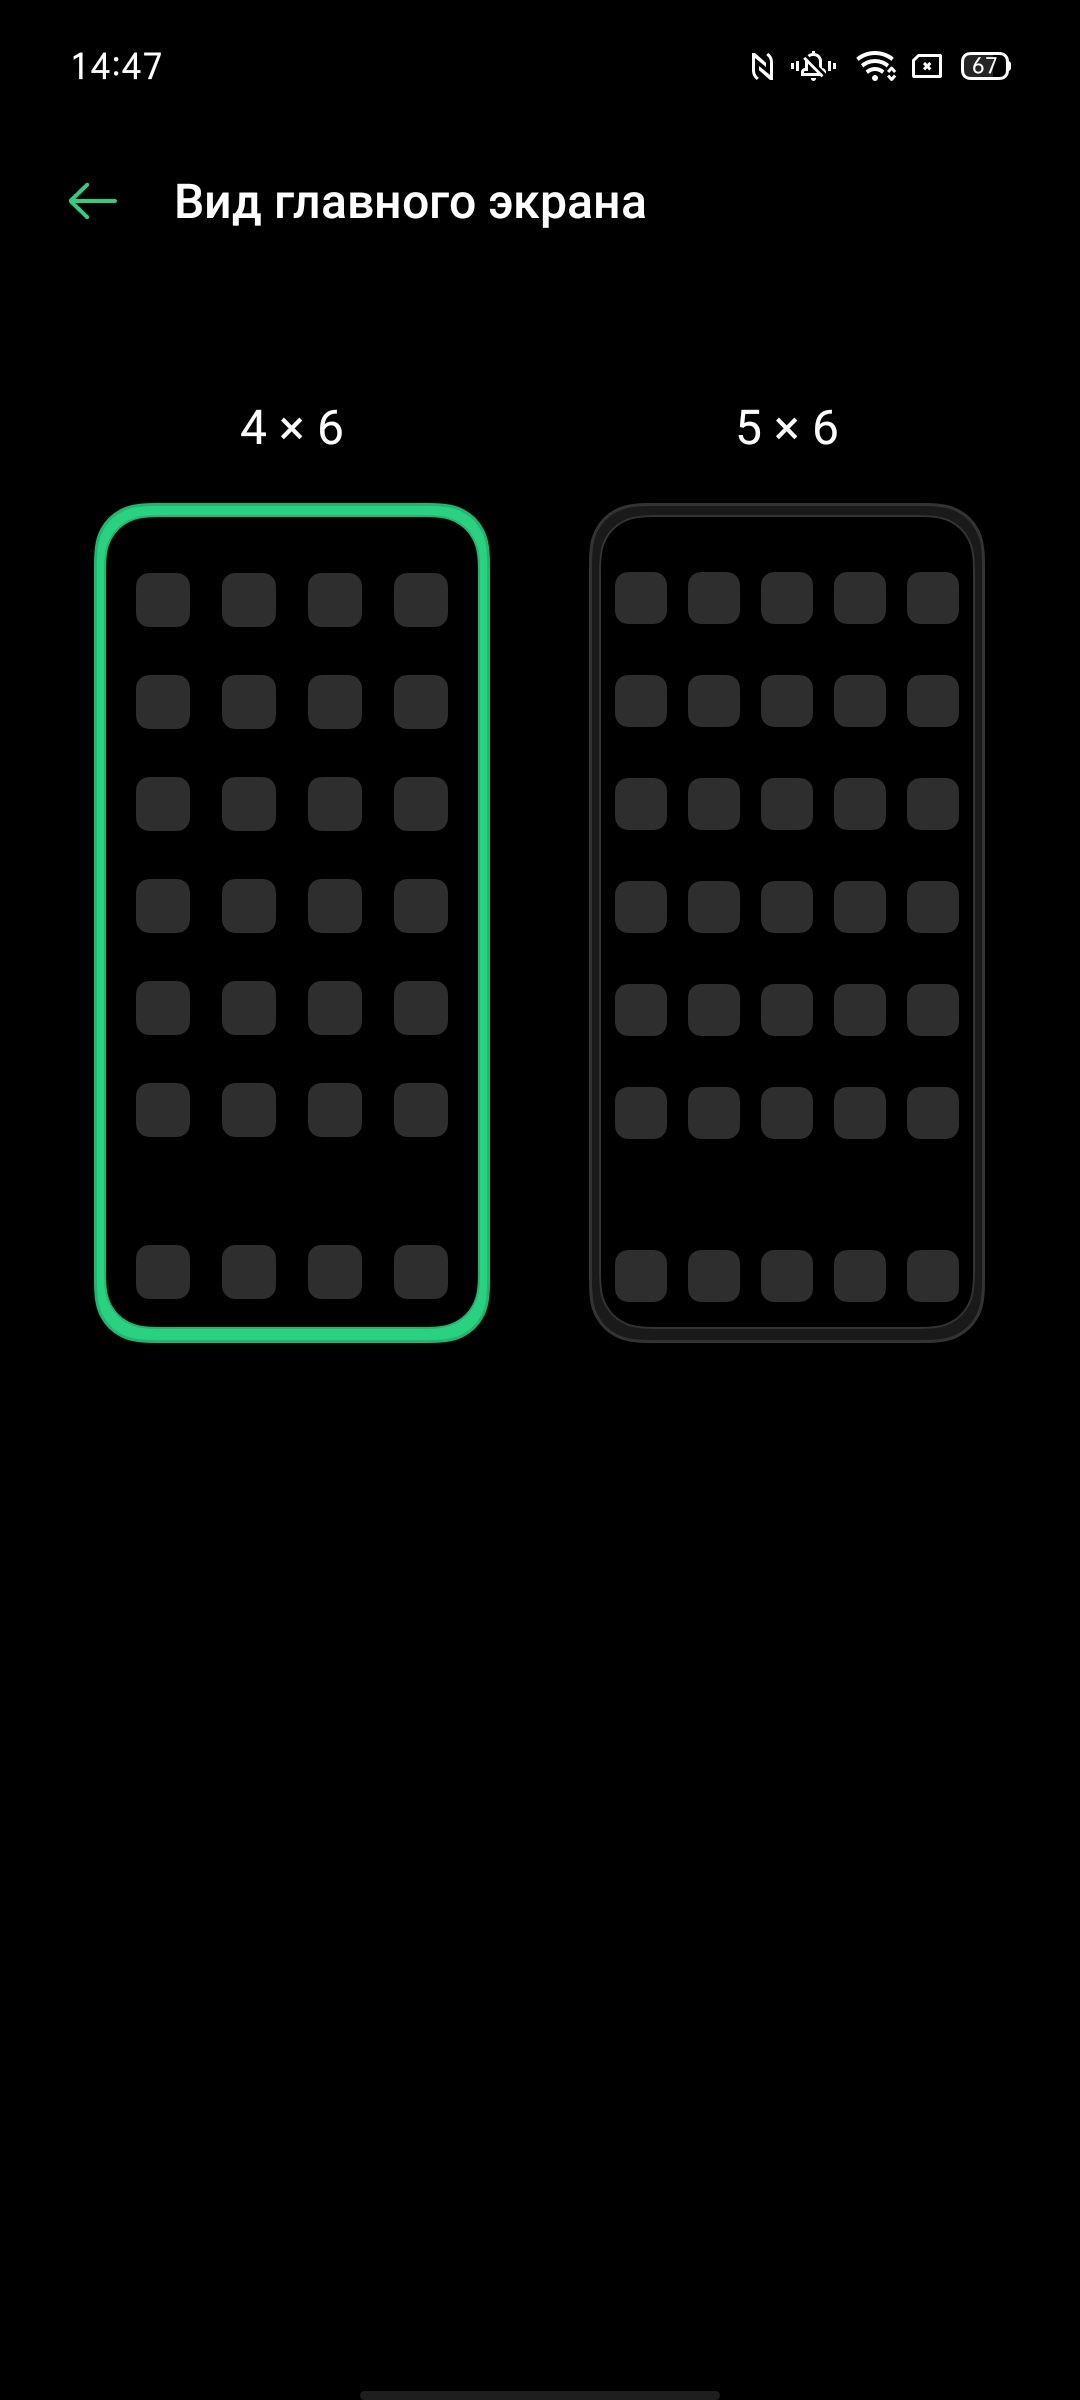 Обзор OPPO A73: смартфон за 7000 гривен, который заряжается меньше часа-210